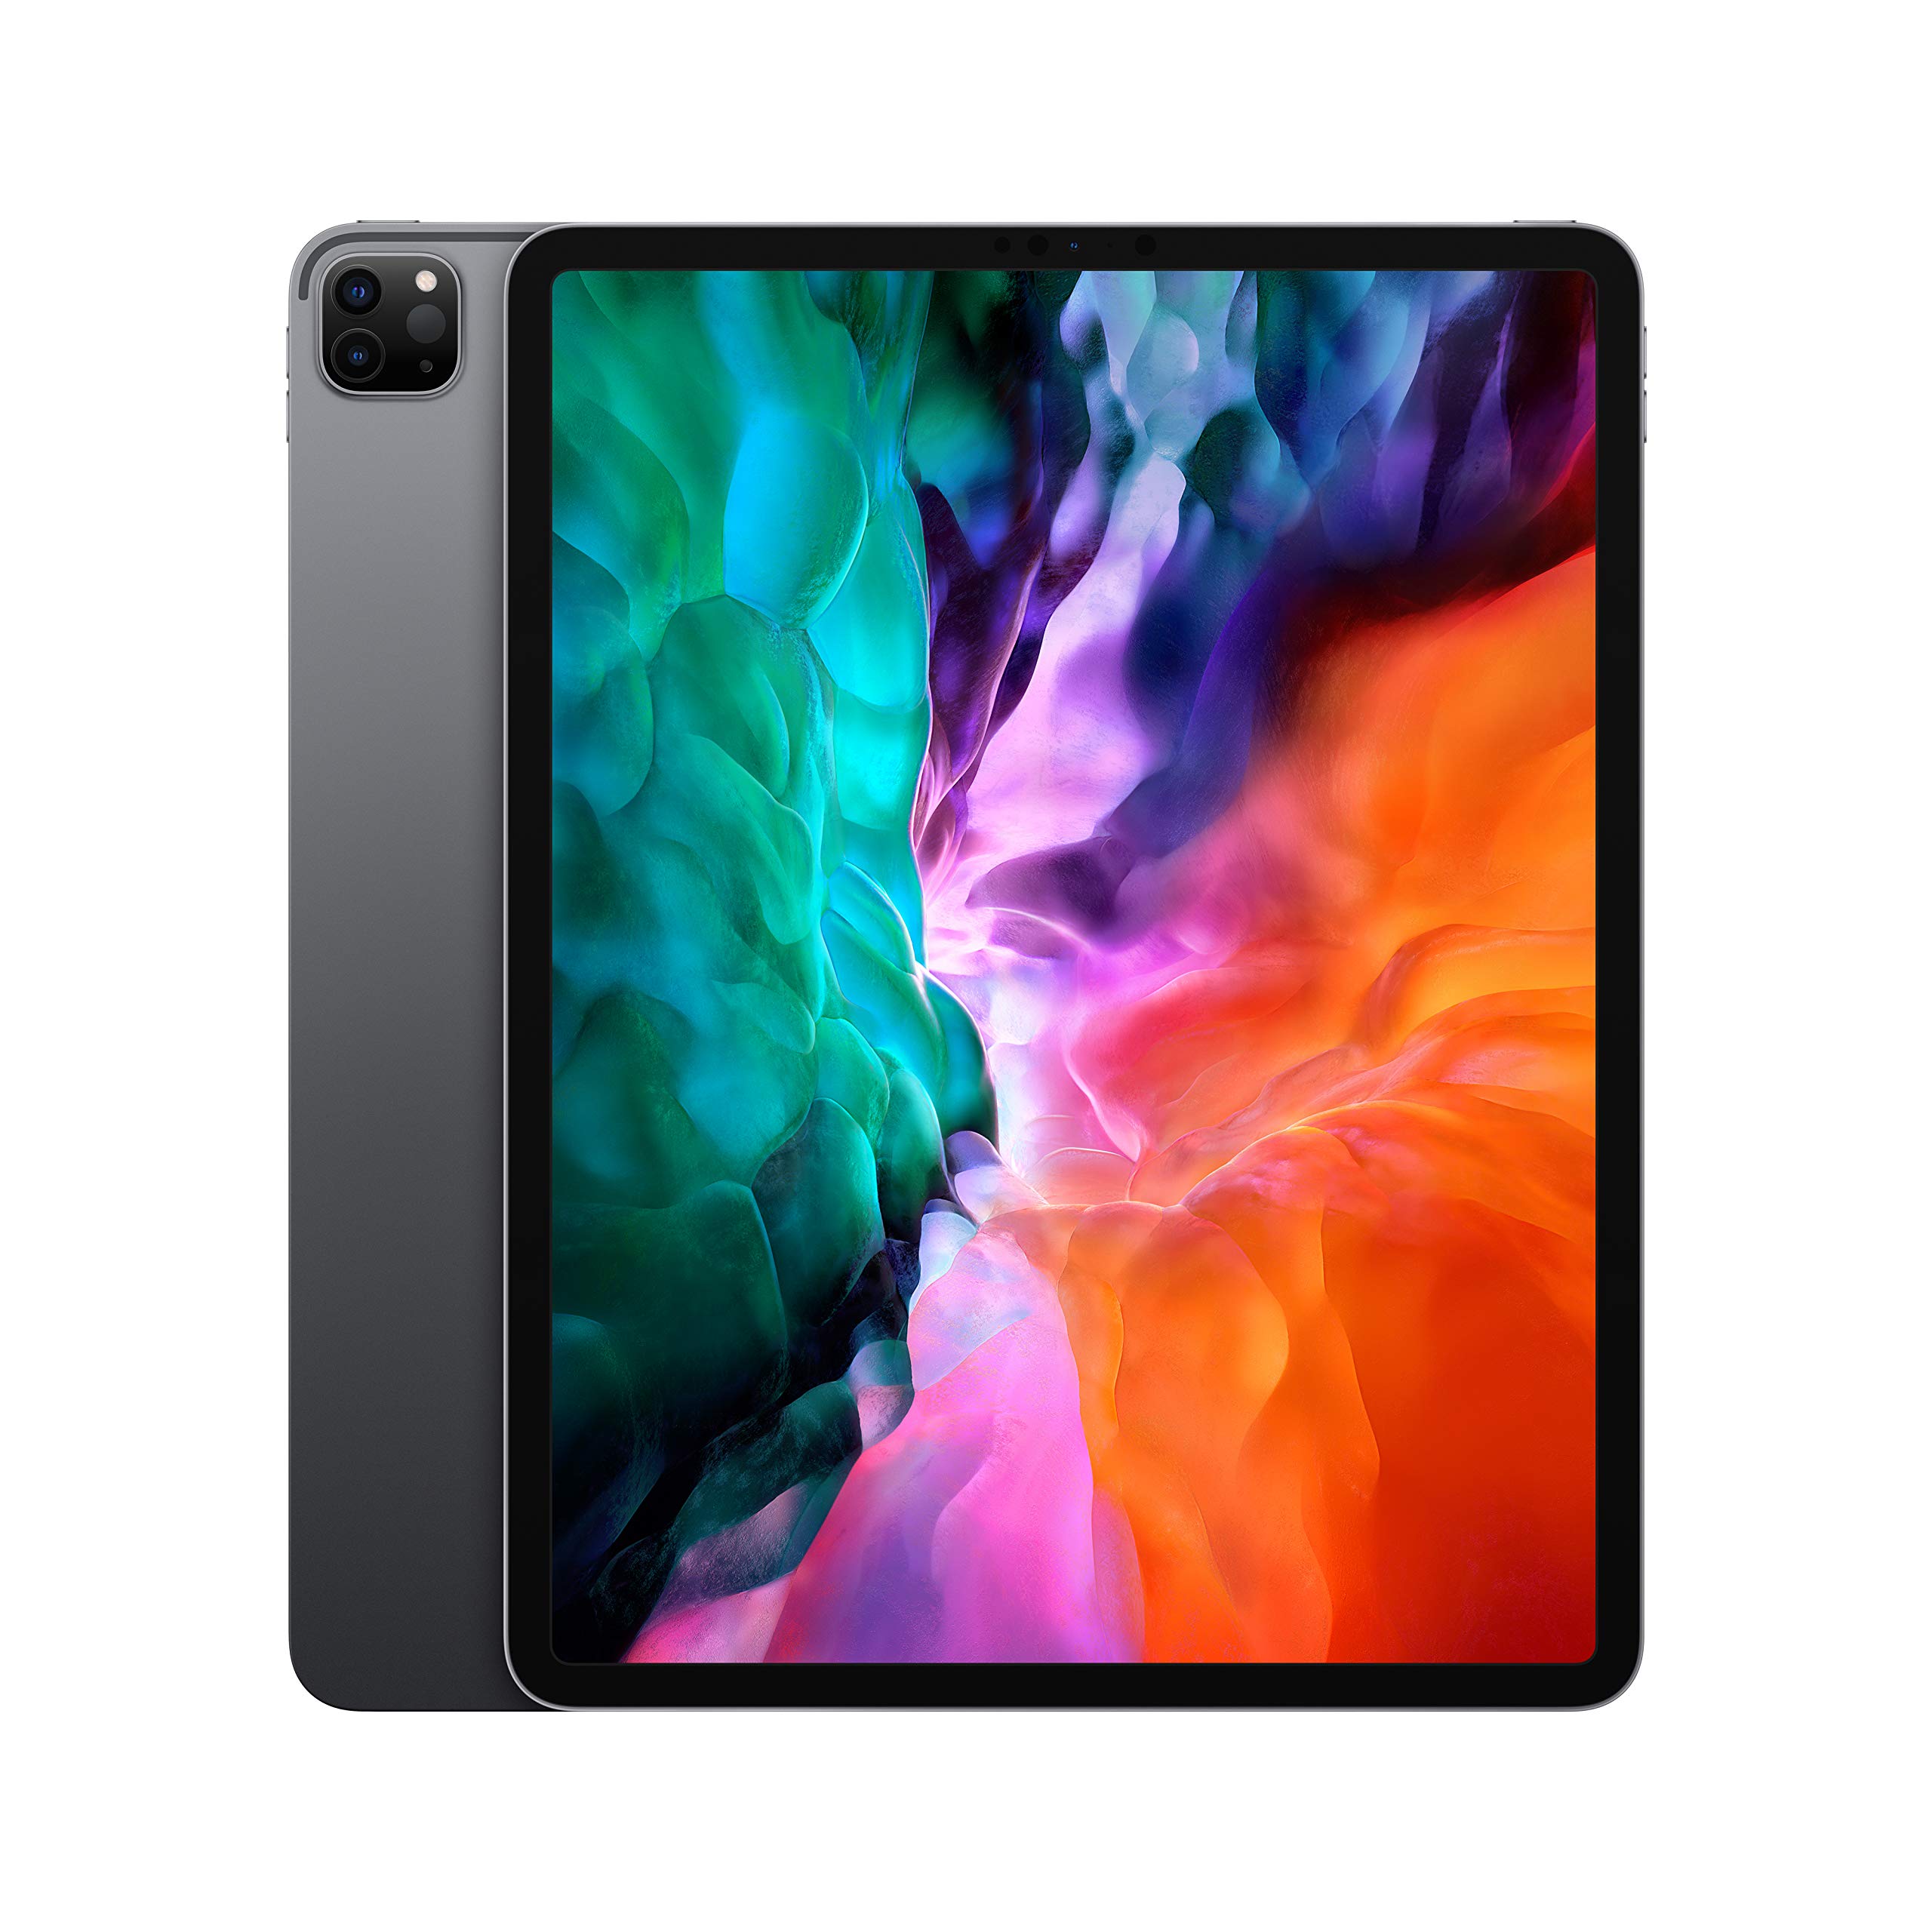 Apple 2020 iPad Pro (12.9-inch, Wi-Fi, 256GB) - Space Gray (4th Generation)